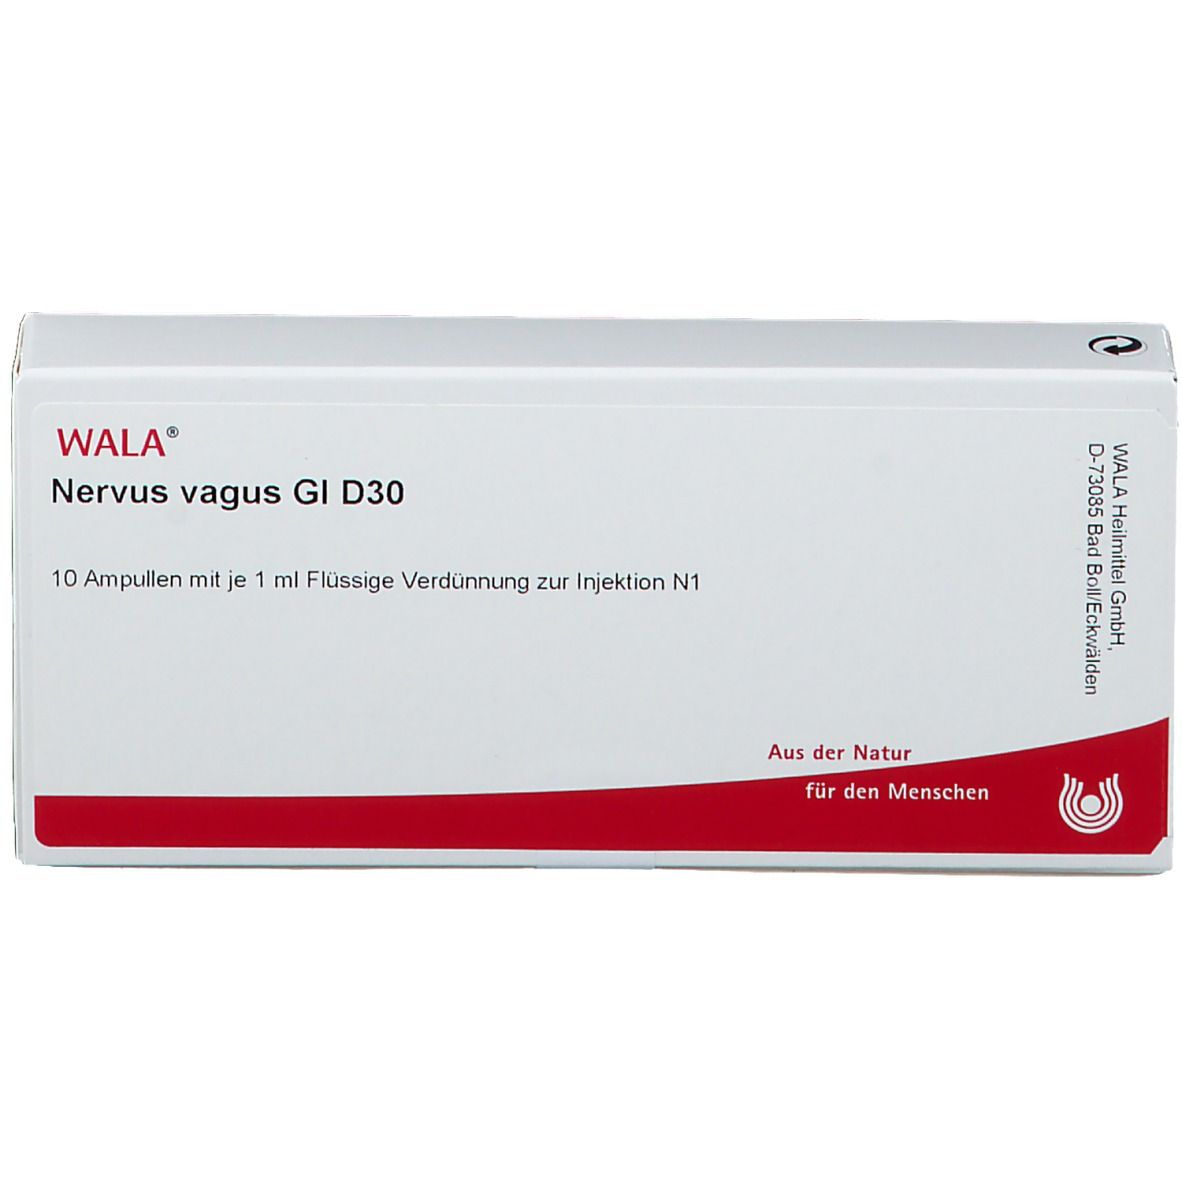 WALA® Nervus vagus Gl D 30